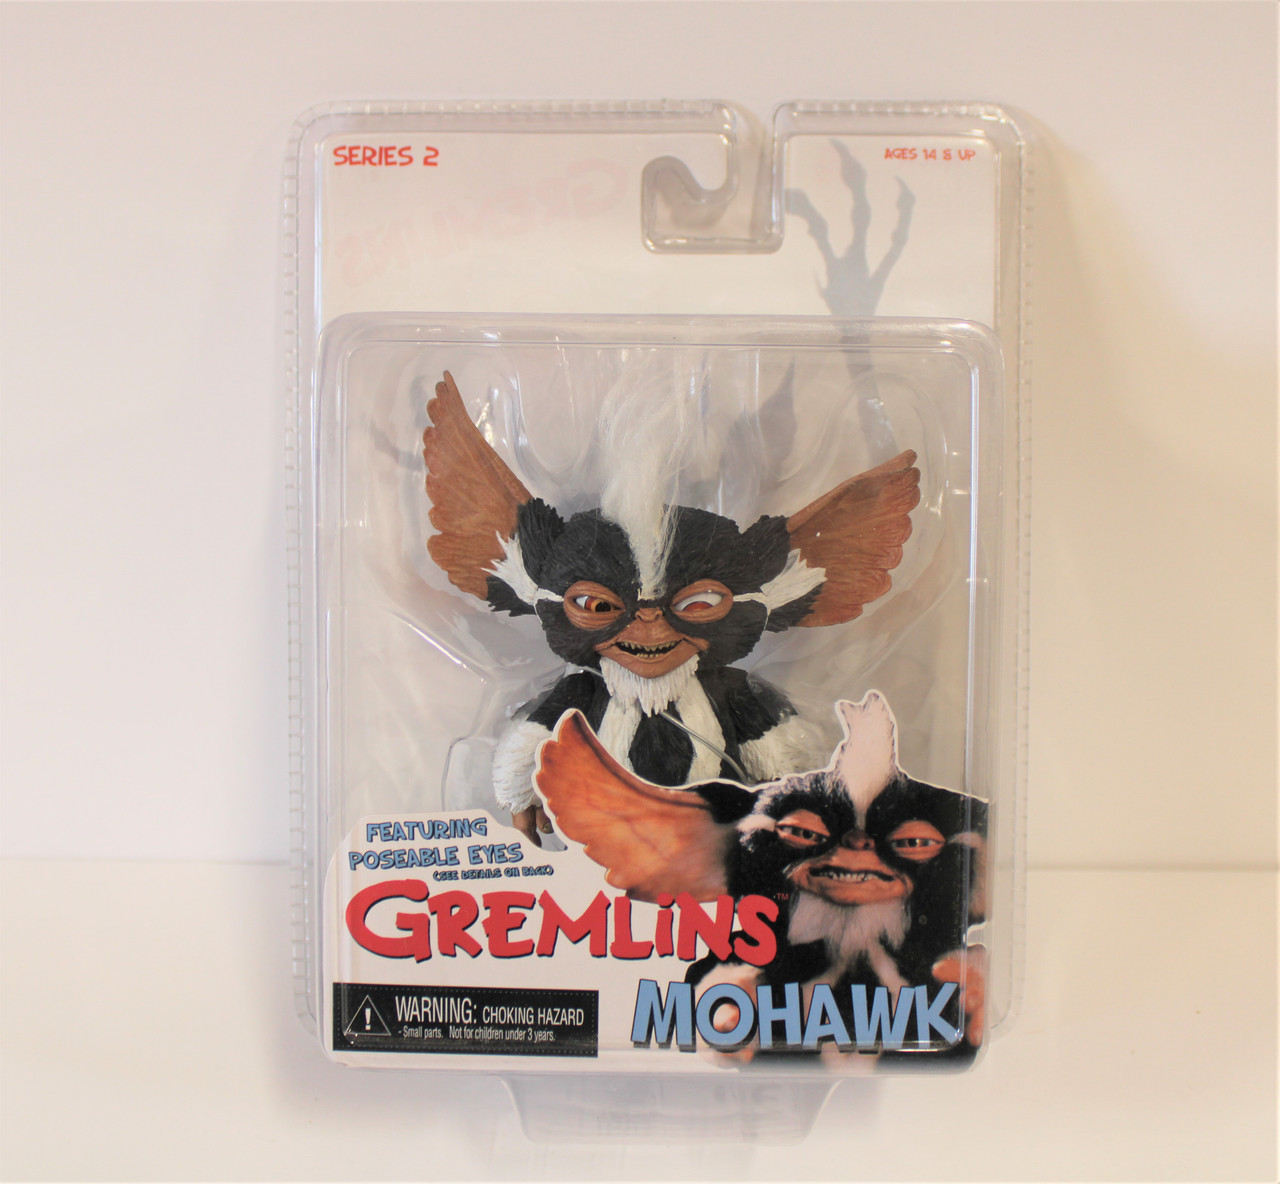 CUSTOM 2005 Neca Reel Toys Hard Copy Prototype Action Figure - Gremlins 2  Mohawk (Displayed with Production Figure)